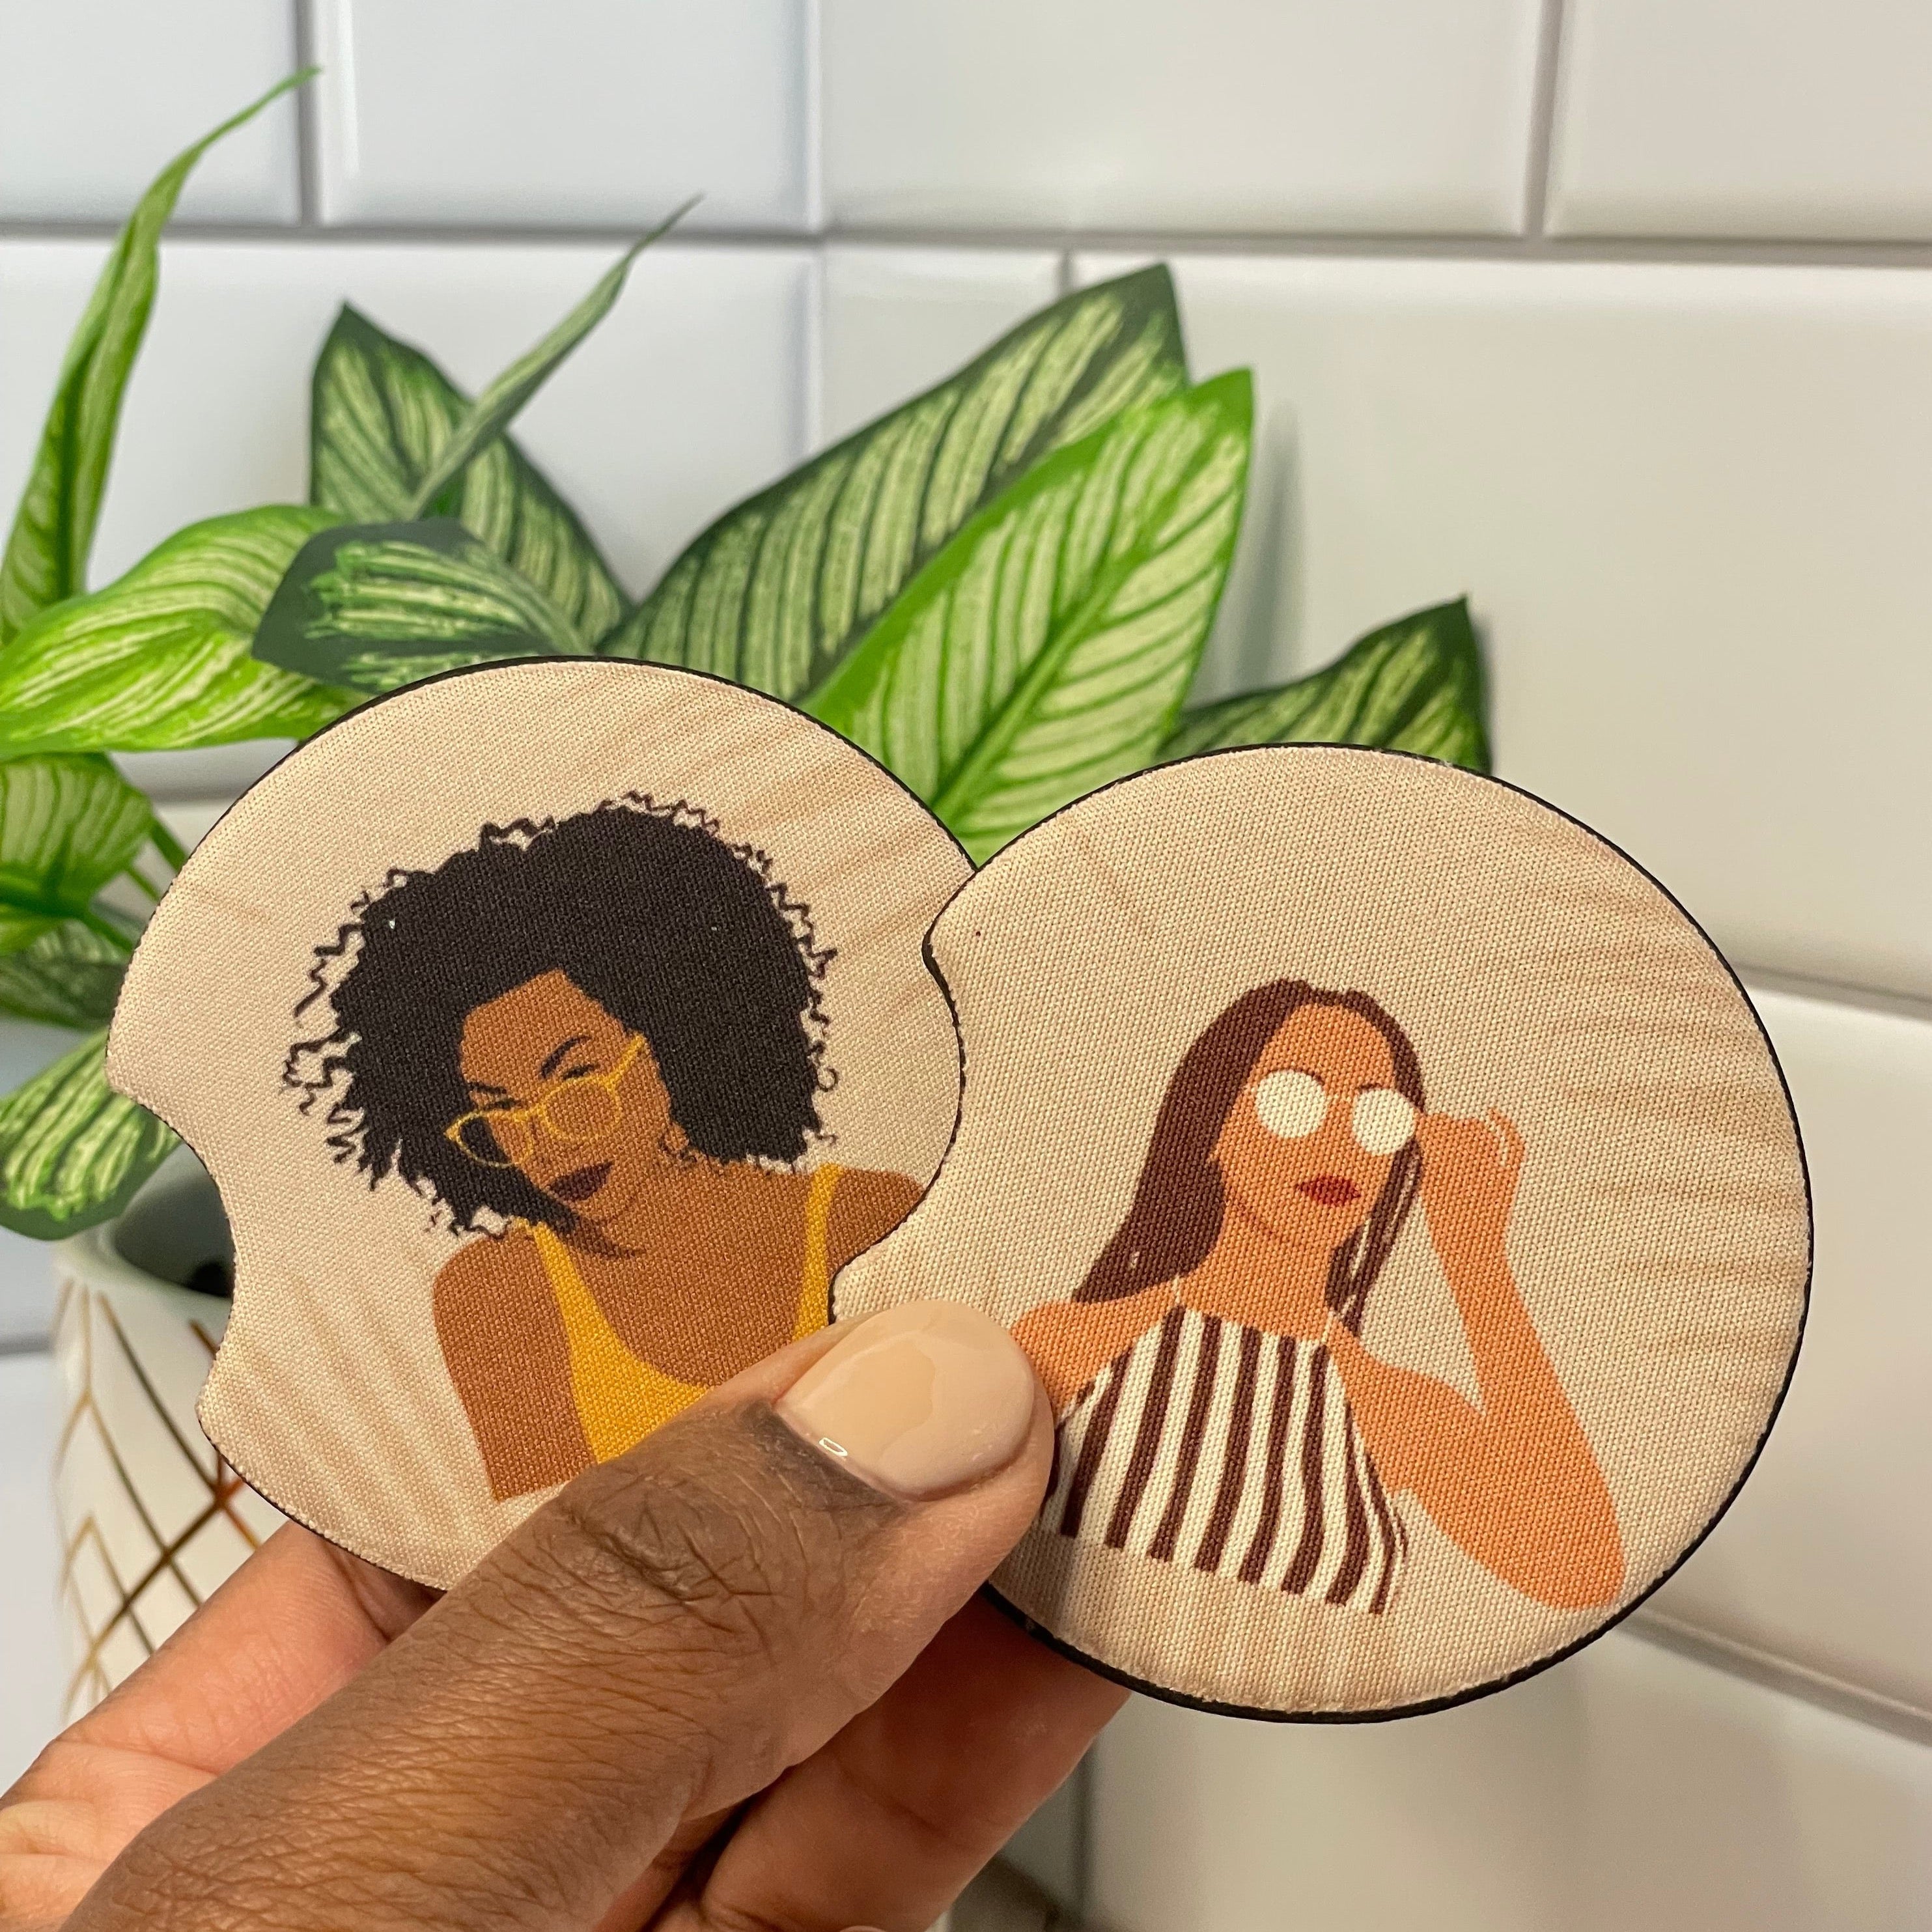 Black Woman Car Coasters, Custom Auto Accessories for Black Girl, Gift –  Lenae Designs